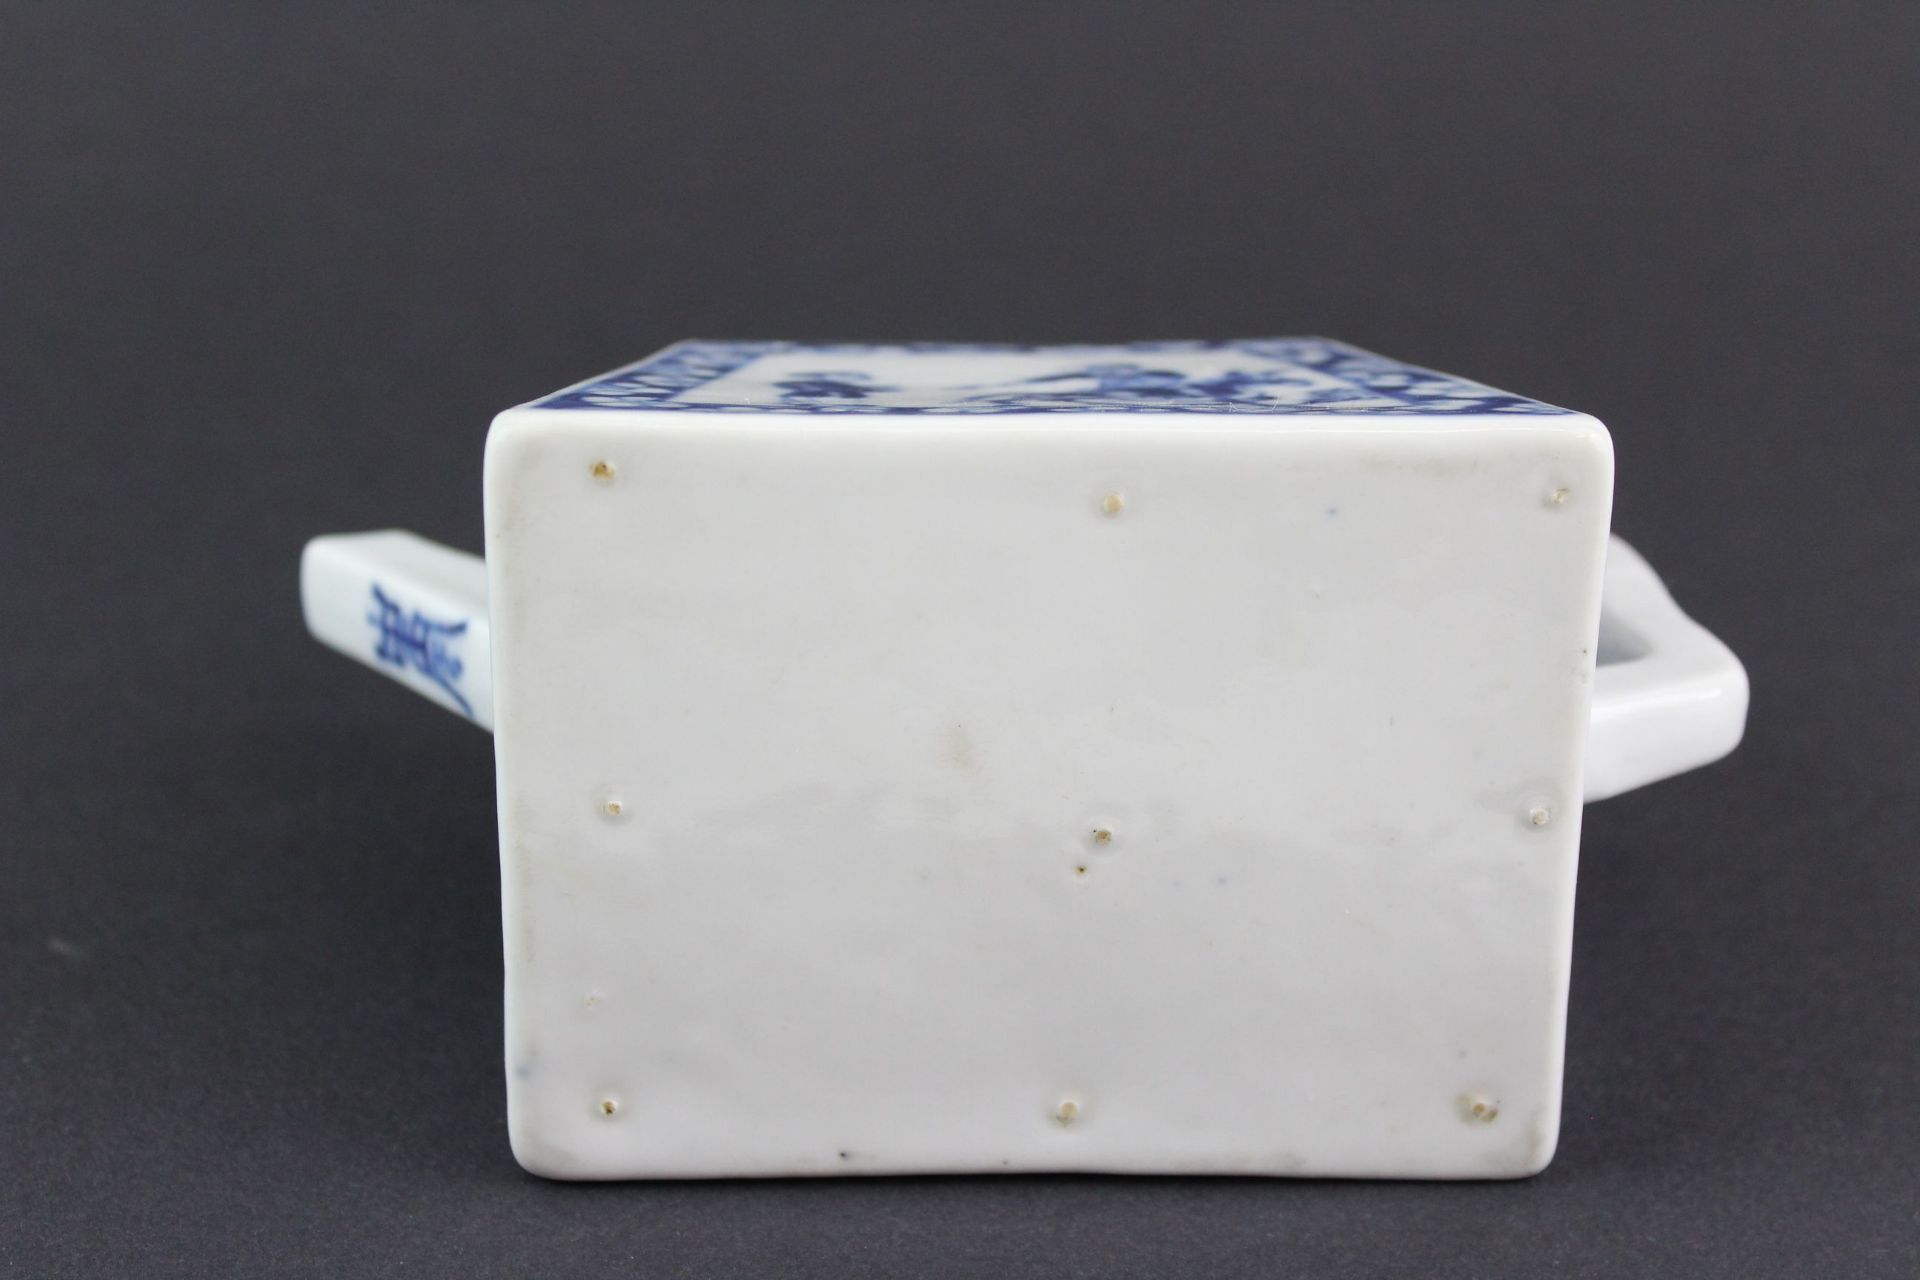 China späte Qing Dynastie Porzellan Teekanne mit BW Malerei - Image 3 of 6